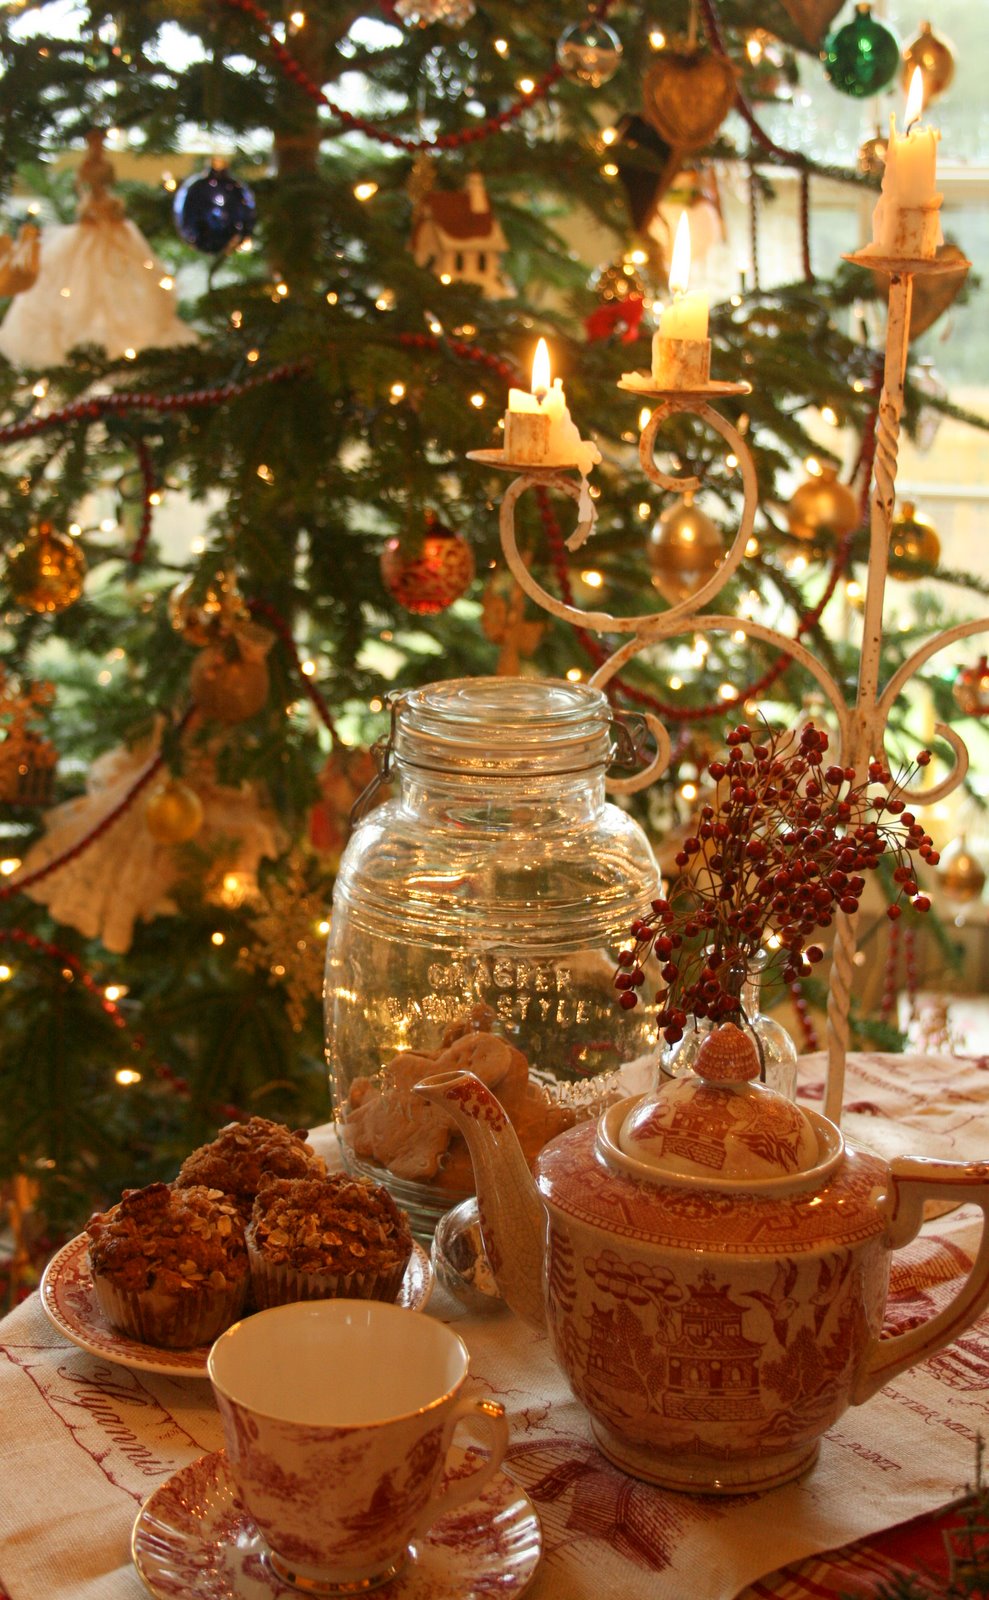 Aiken House & Gardens: A Christmas Tea